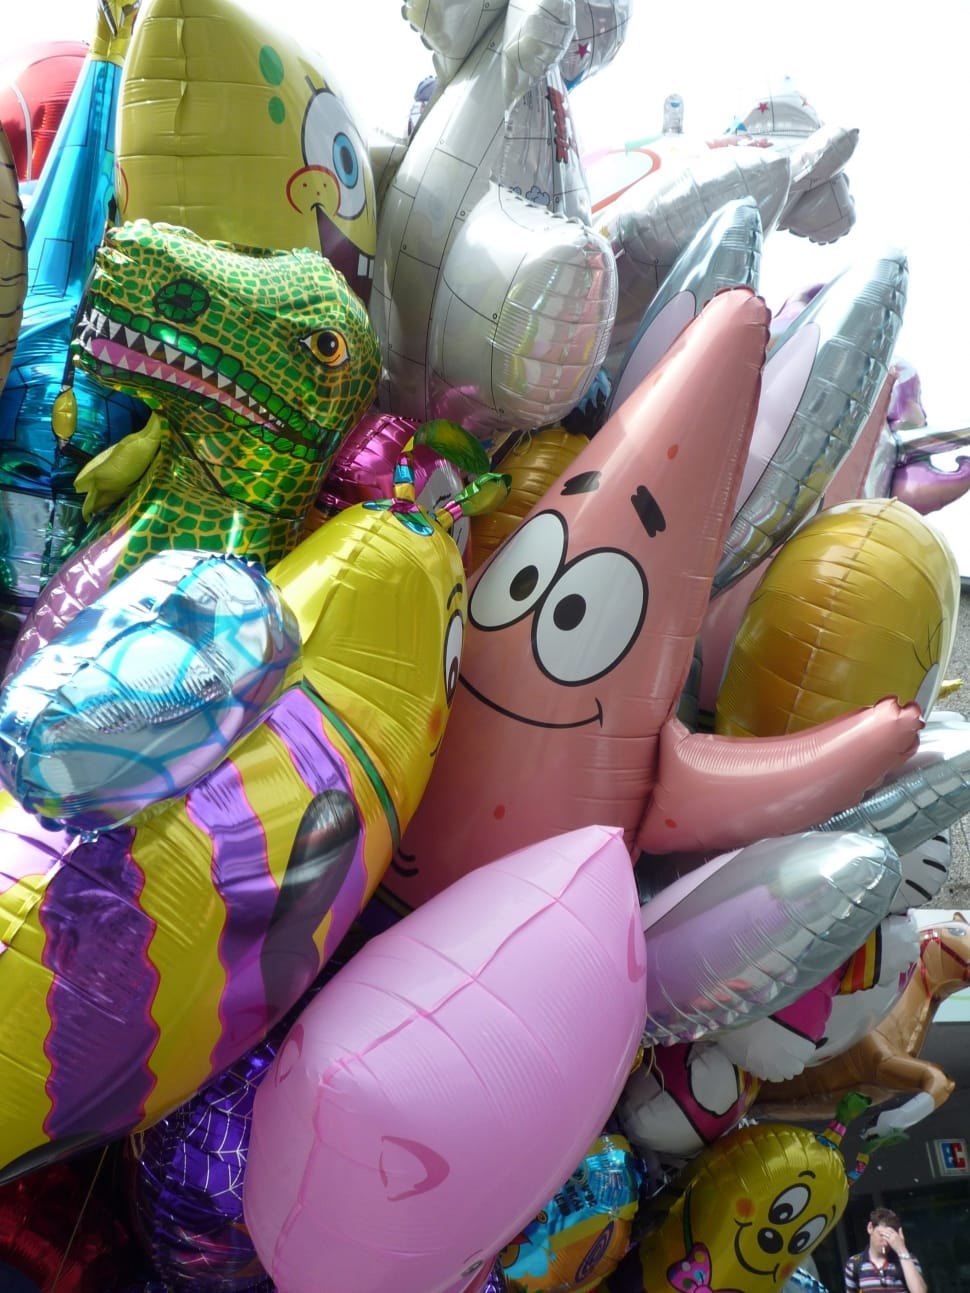 spongebob squarepants and patrick star balloon preview